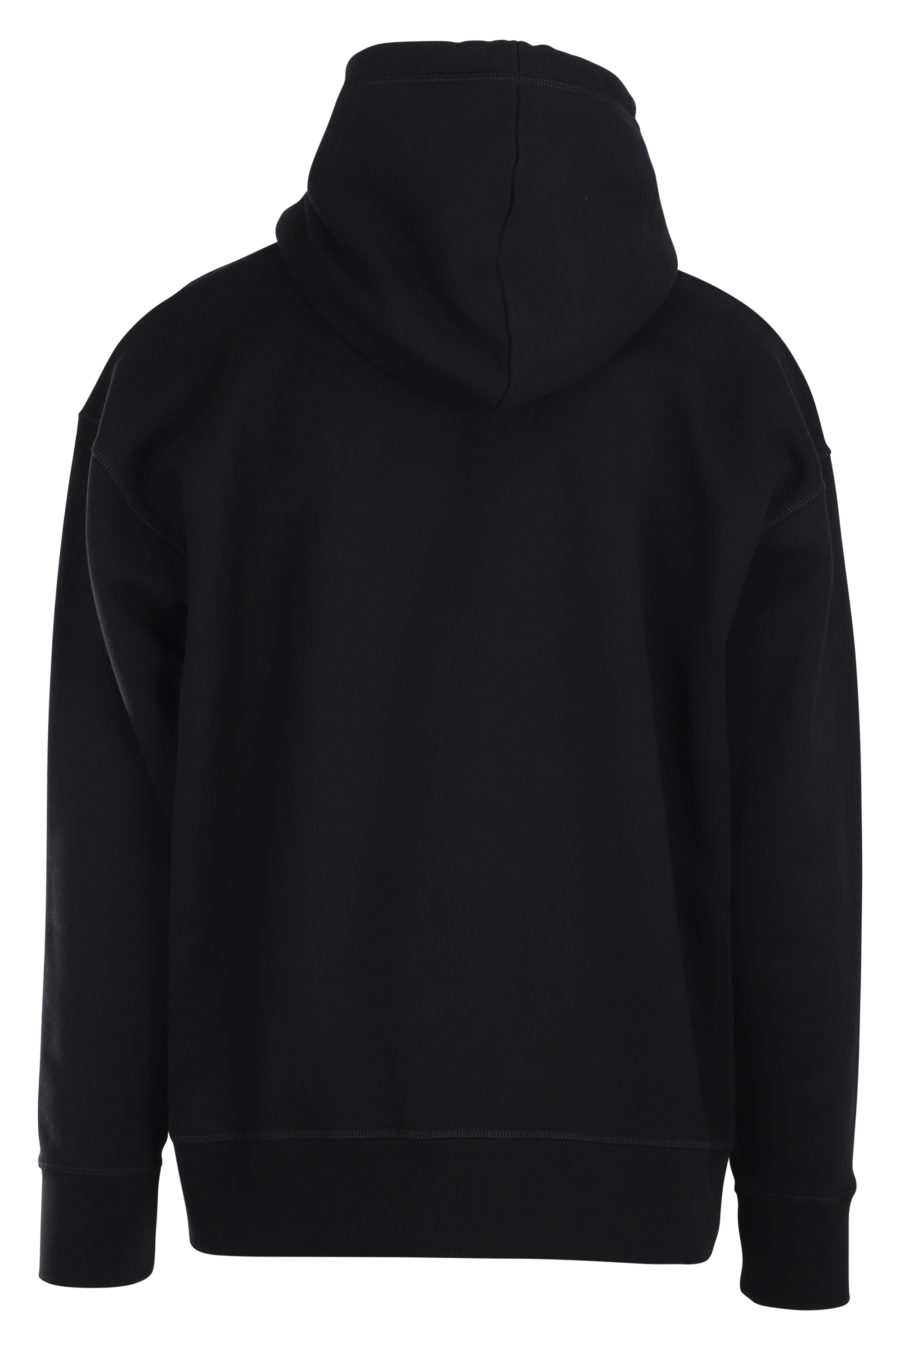 Camisola preta com capuz e logótipo "bromance" branco - IMG 9898